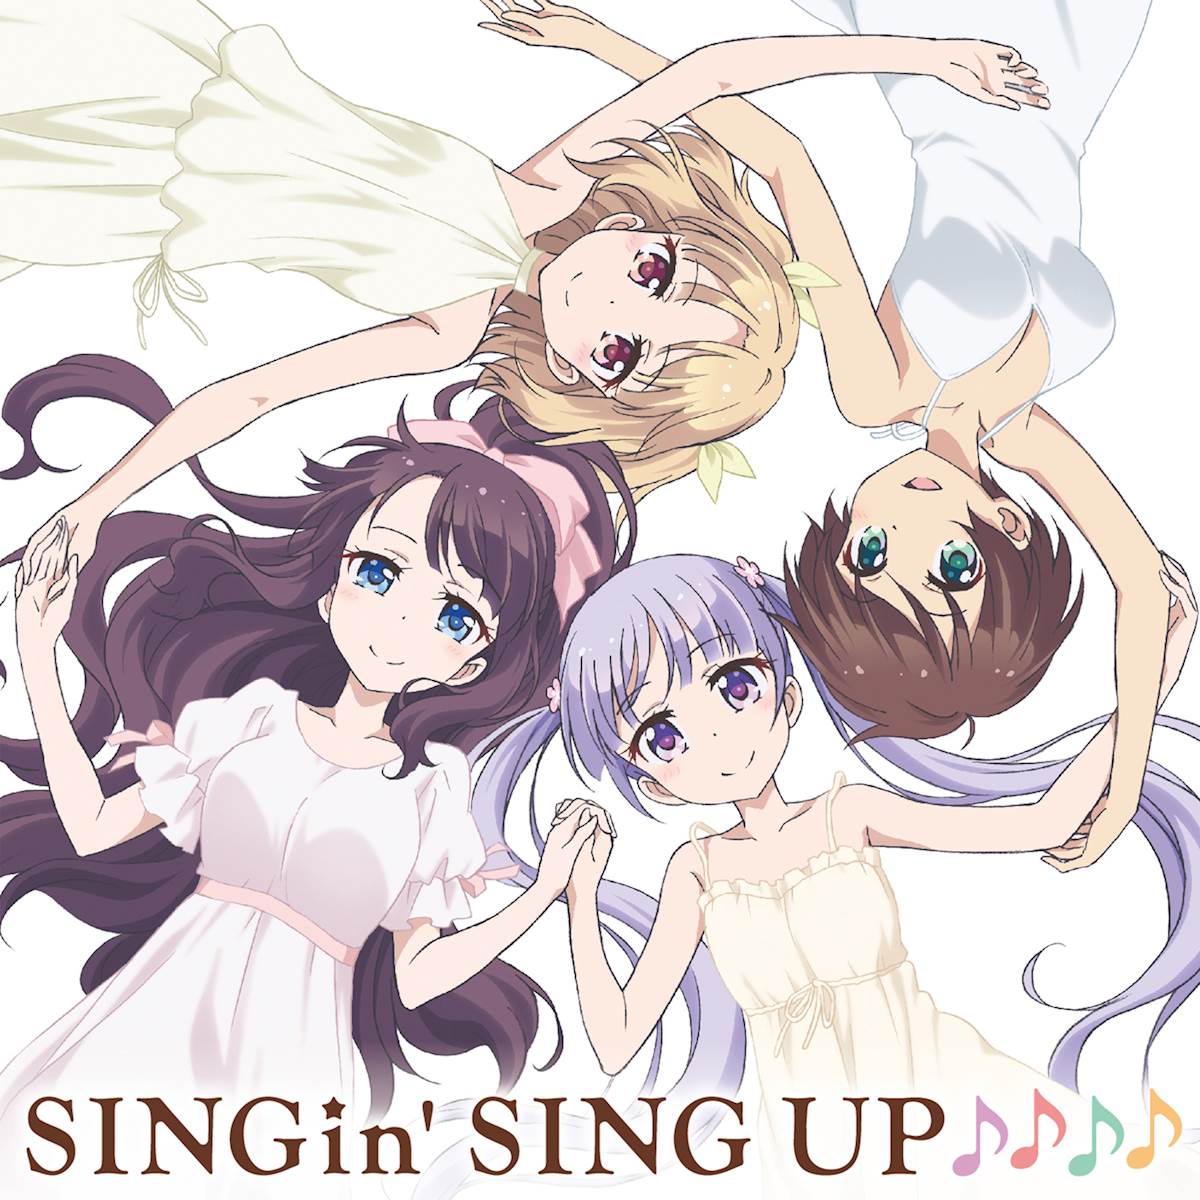 [180124]TVアニメ『NEW GAME!!』キャラクターソングミニアルバム2「SINGin' SING UP♪♪♪♪」(WAV)